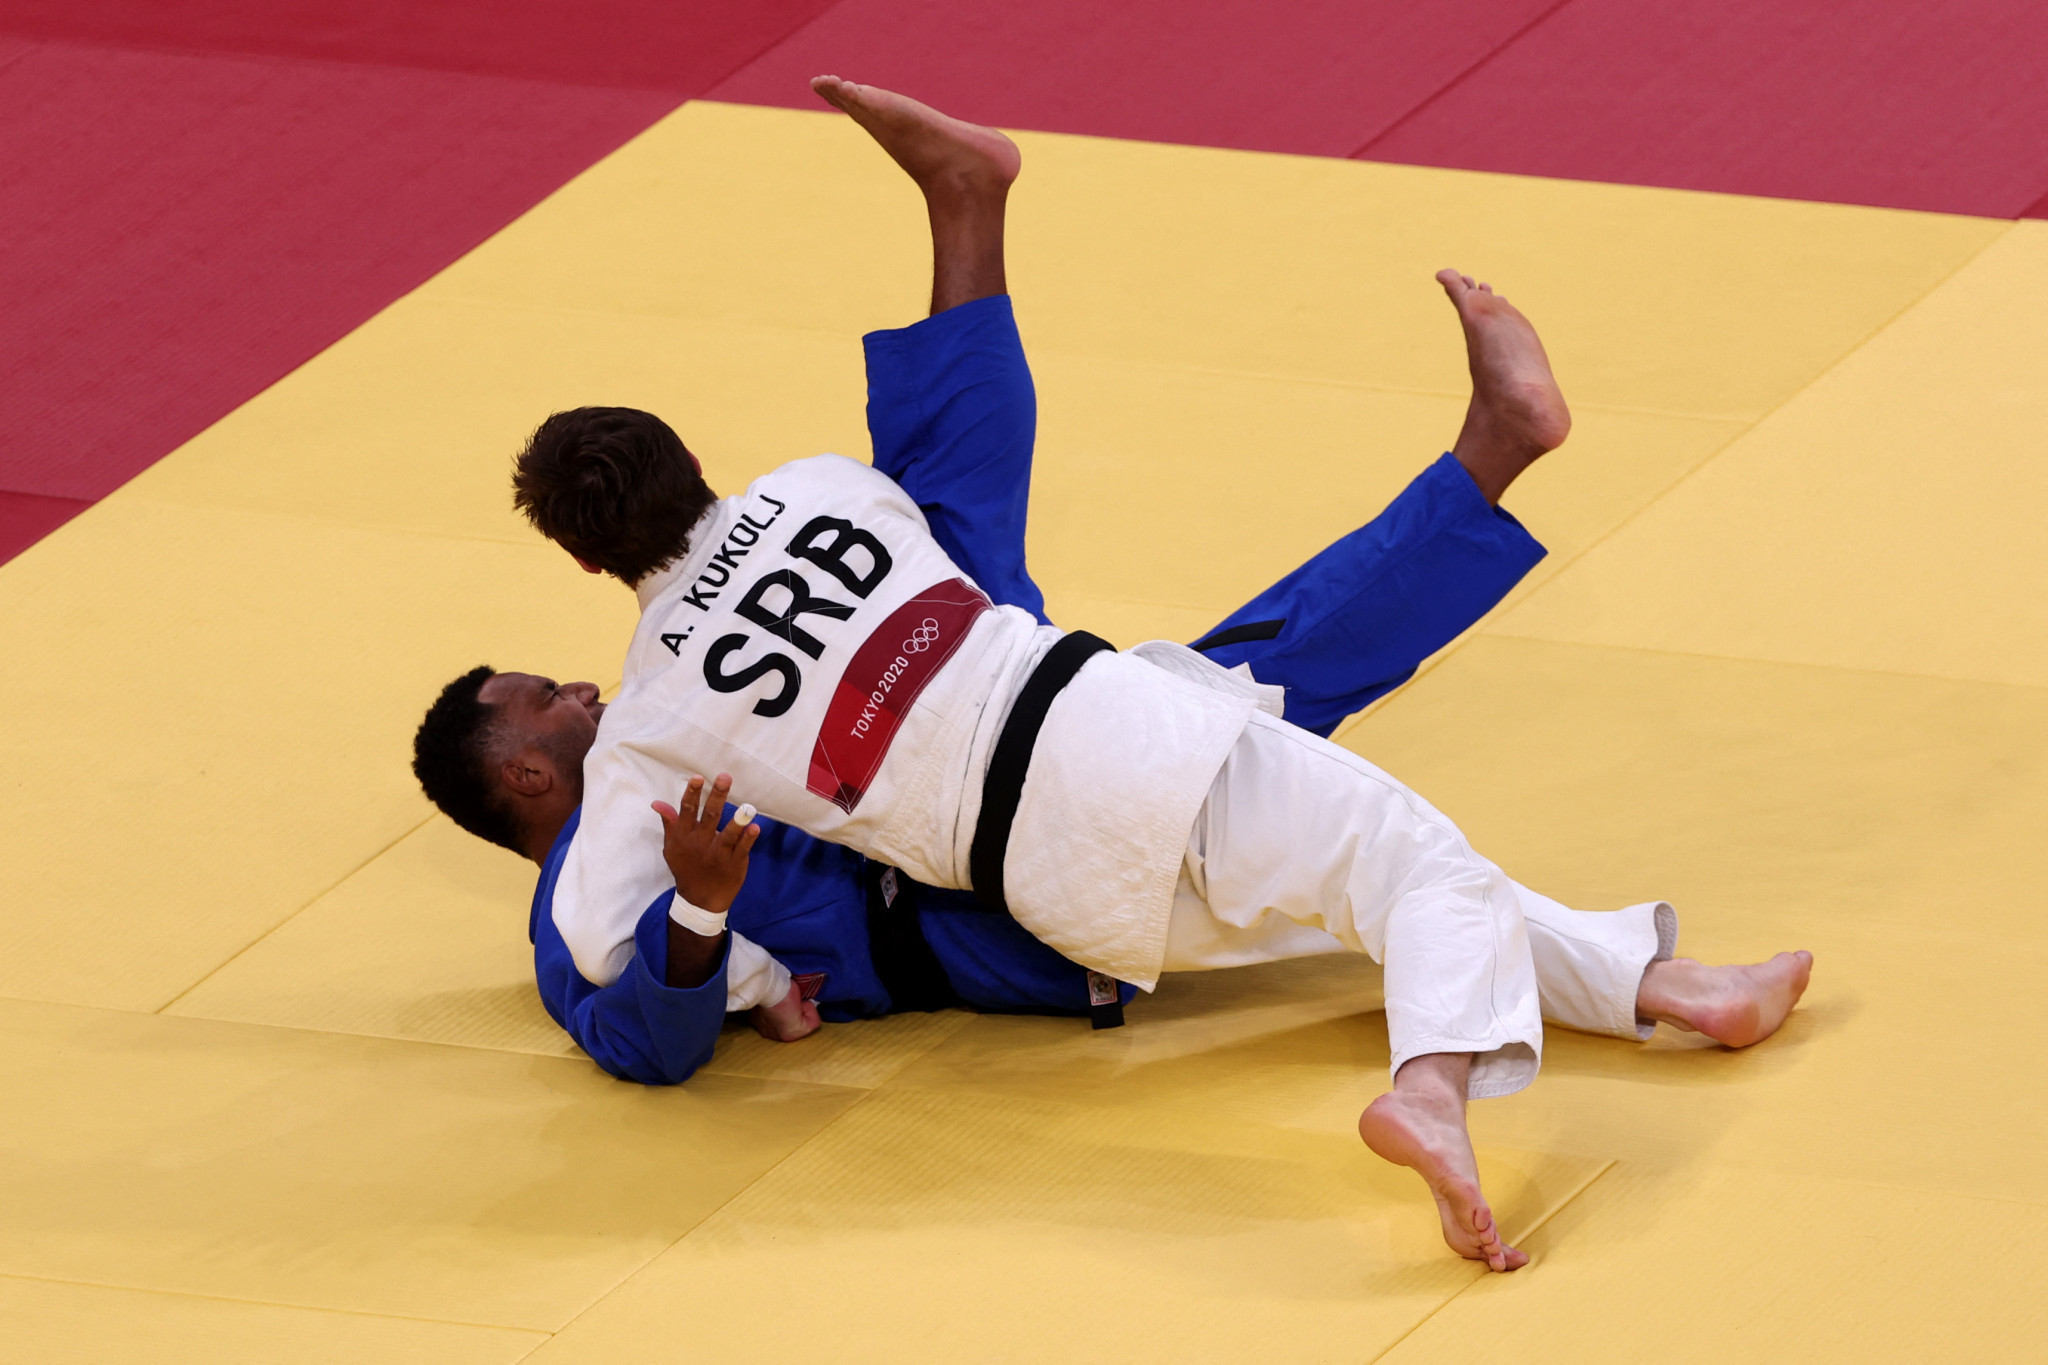 Fijian Tevita Takayawa, in blue, was defeated by Serbia's Aleksandar Kukolj in the men’s under-100kg judo tournament at Tokyo 2020 ©Getty Images